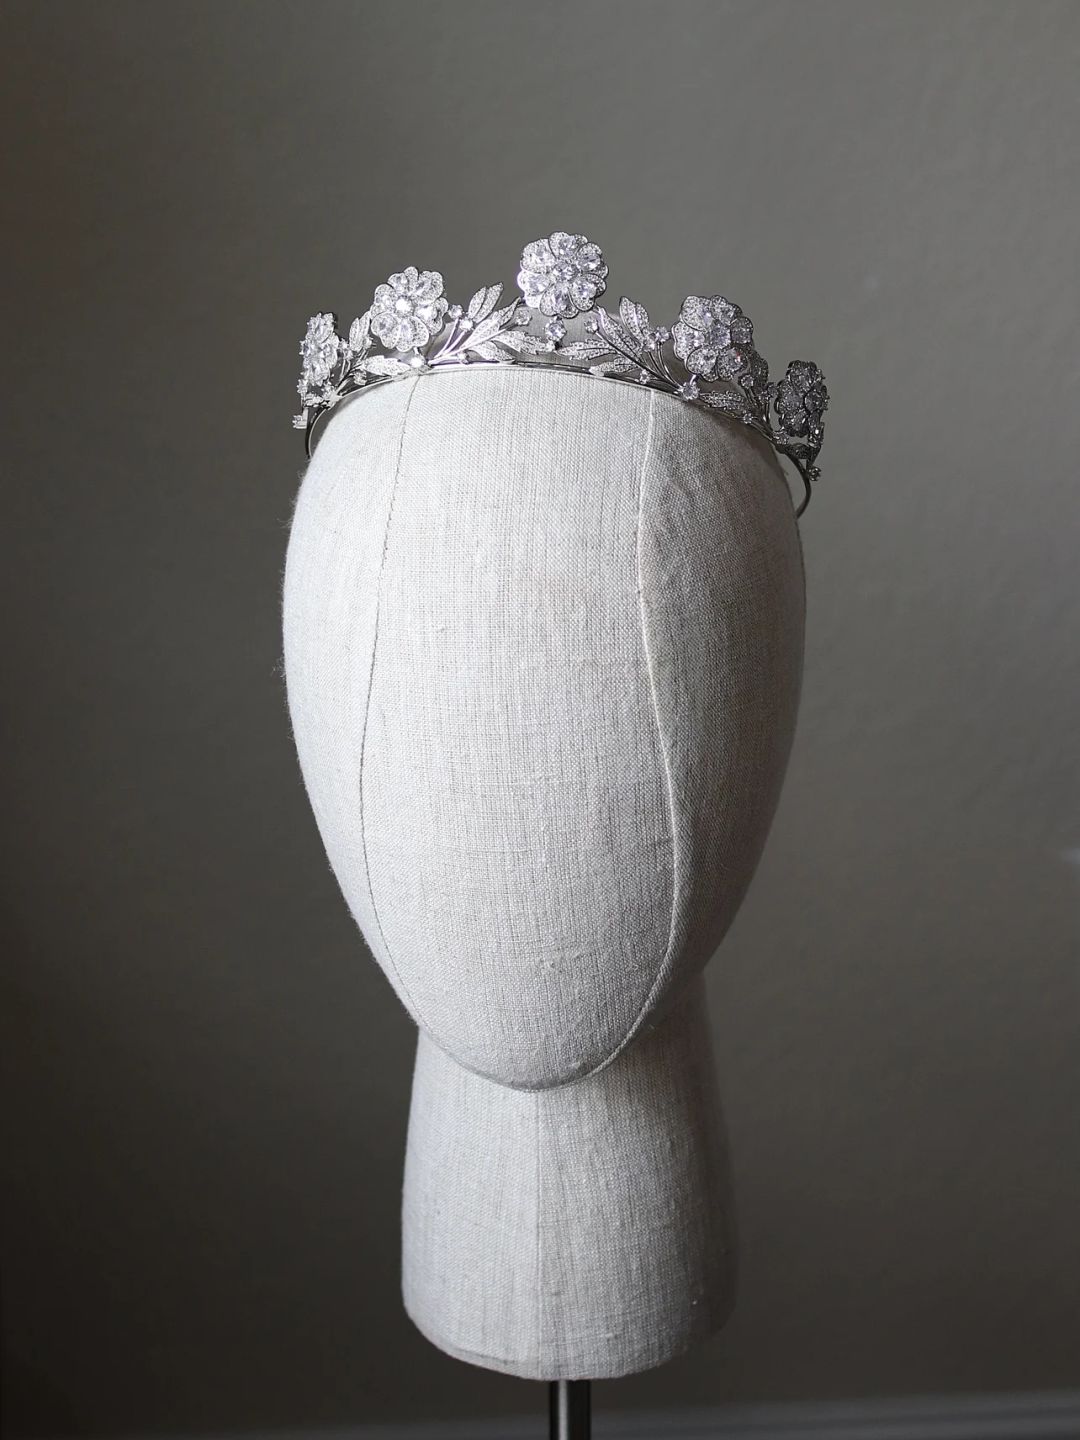 we've found an exact replica of princess kate's strathmore rose tiara